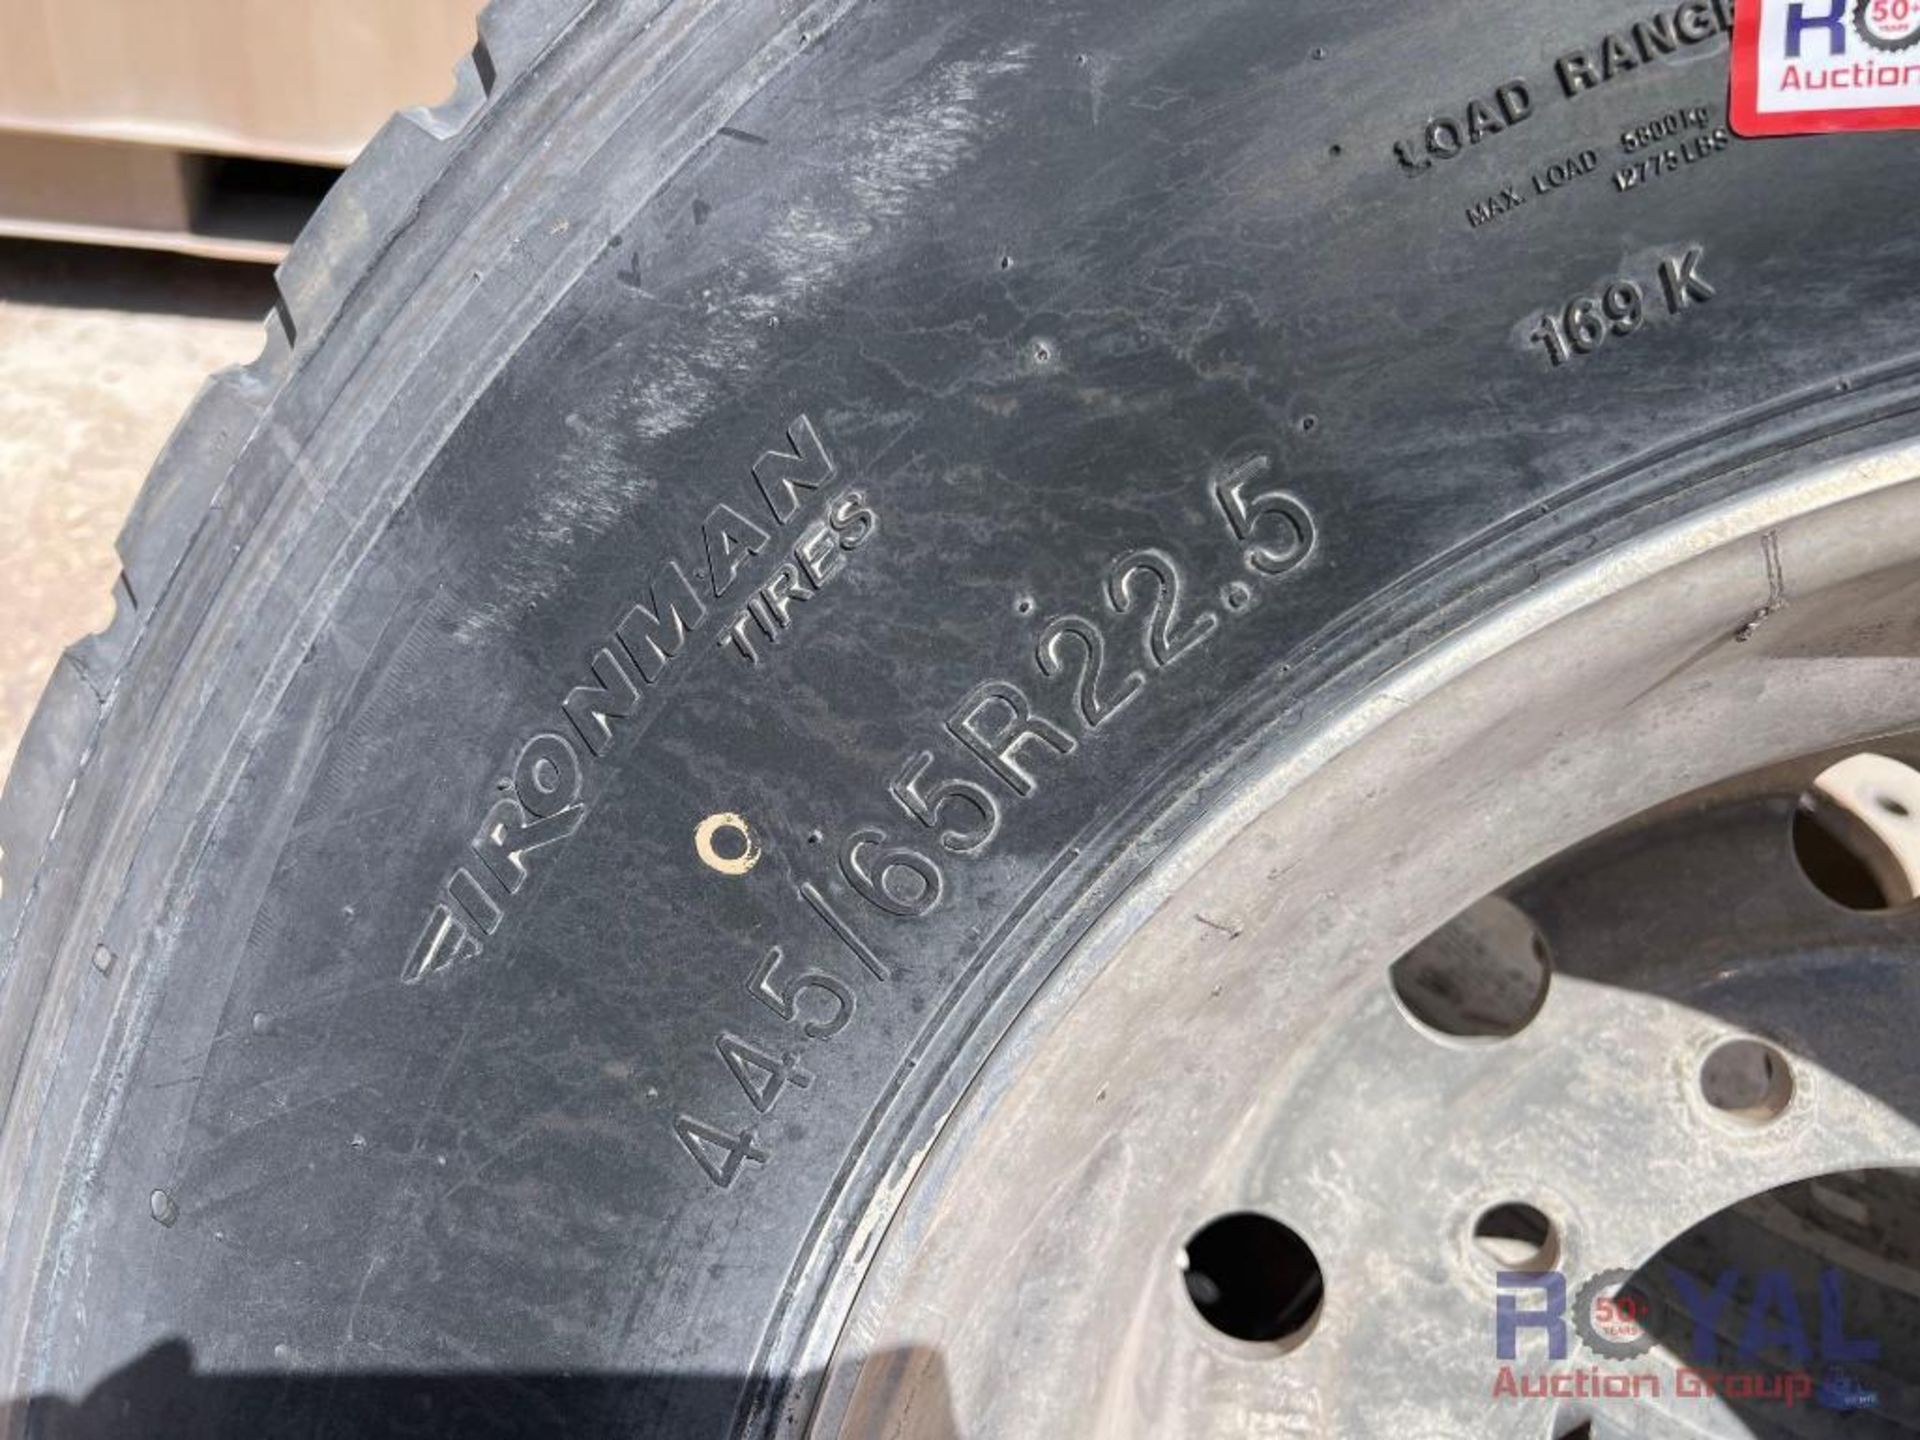 1 Unused and 1 Used 445/65R22.5 Tires on Alcoa Wheels - Image 2 of 3